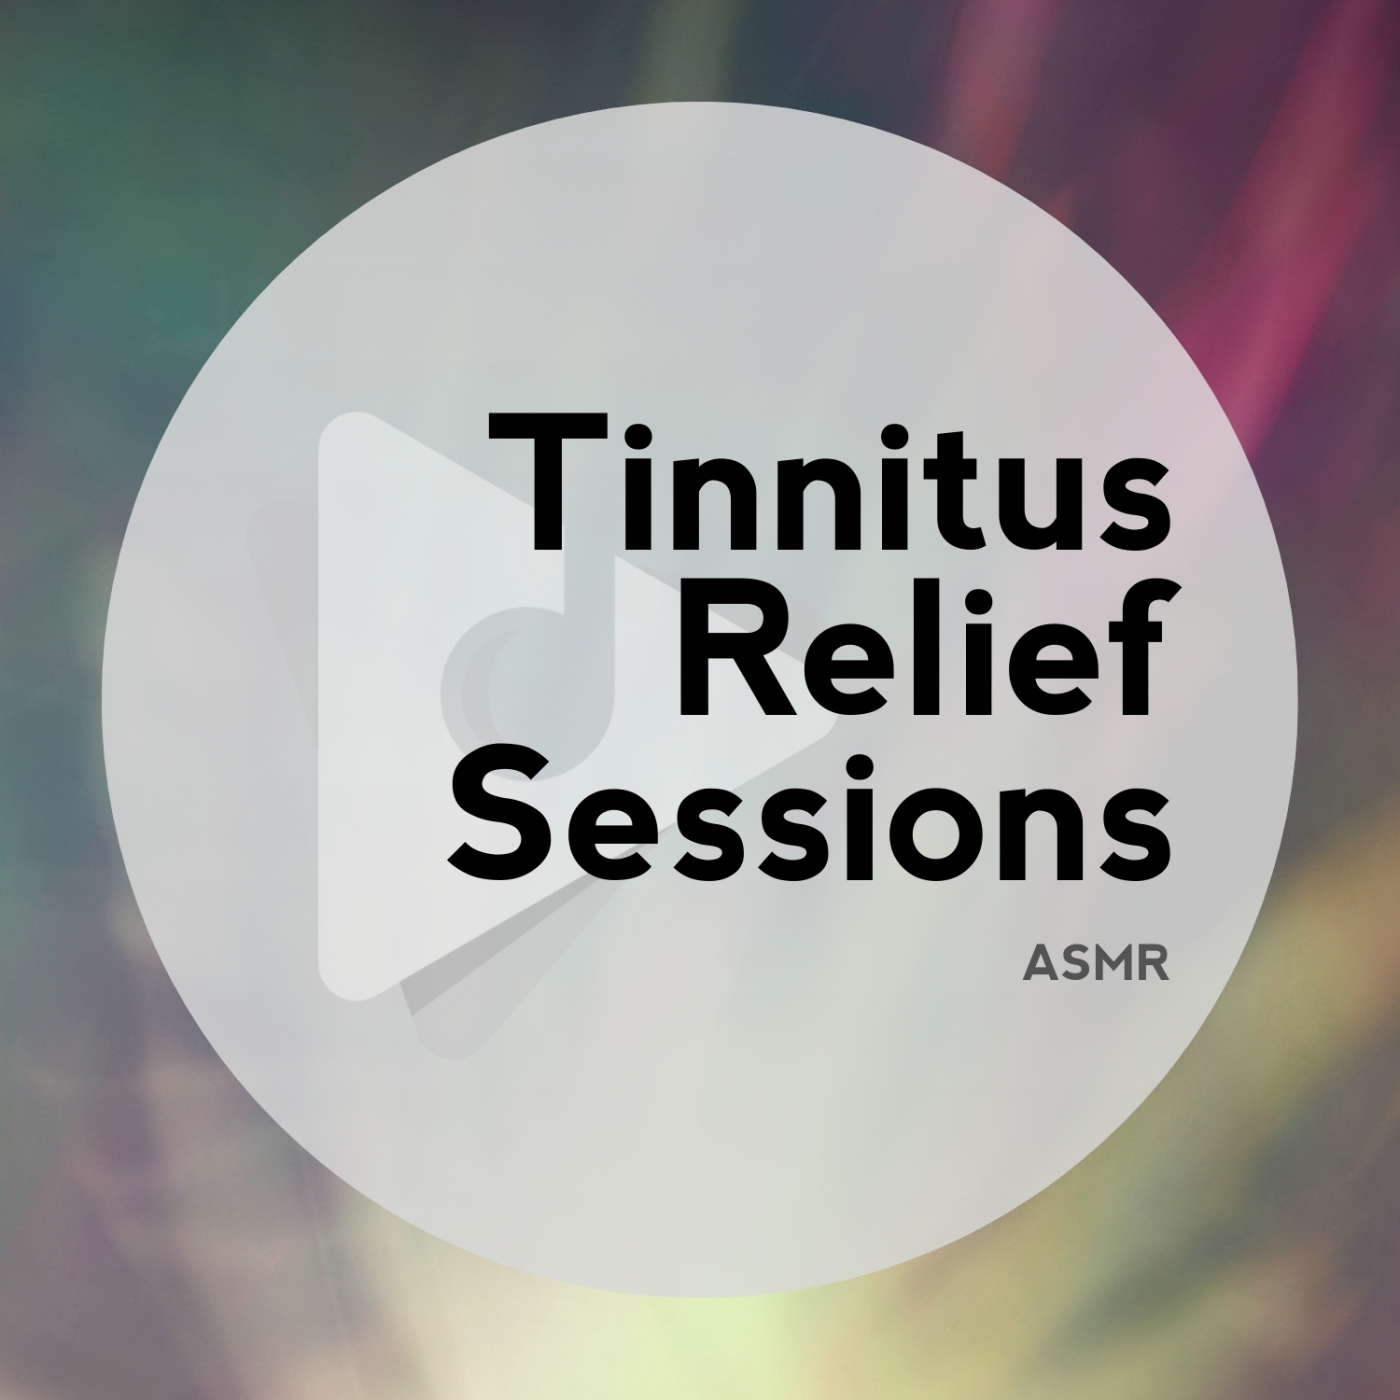 Tinnitus Relief Sessions ASMR